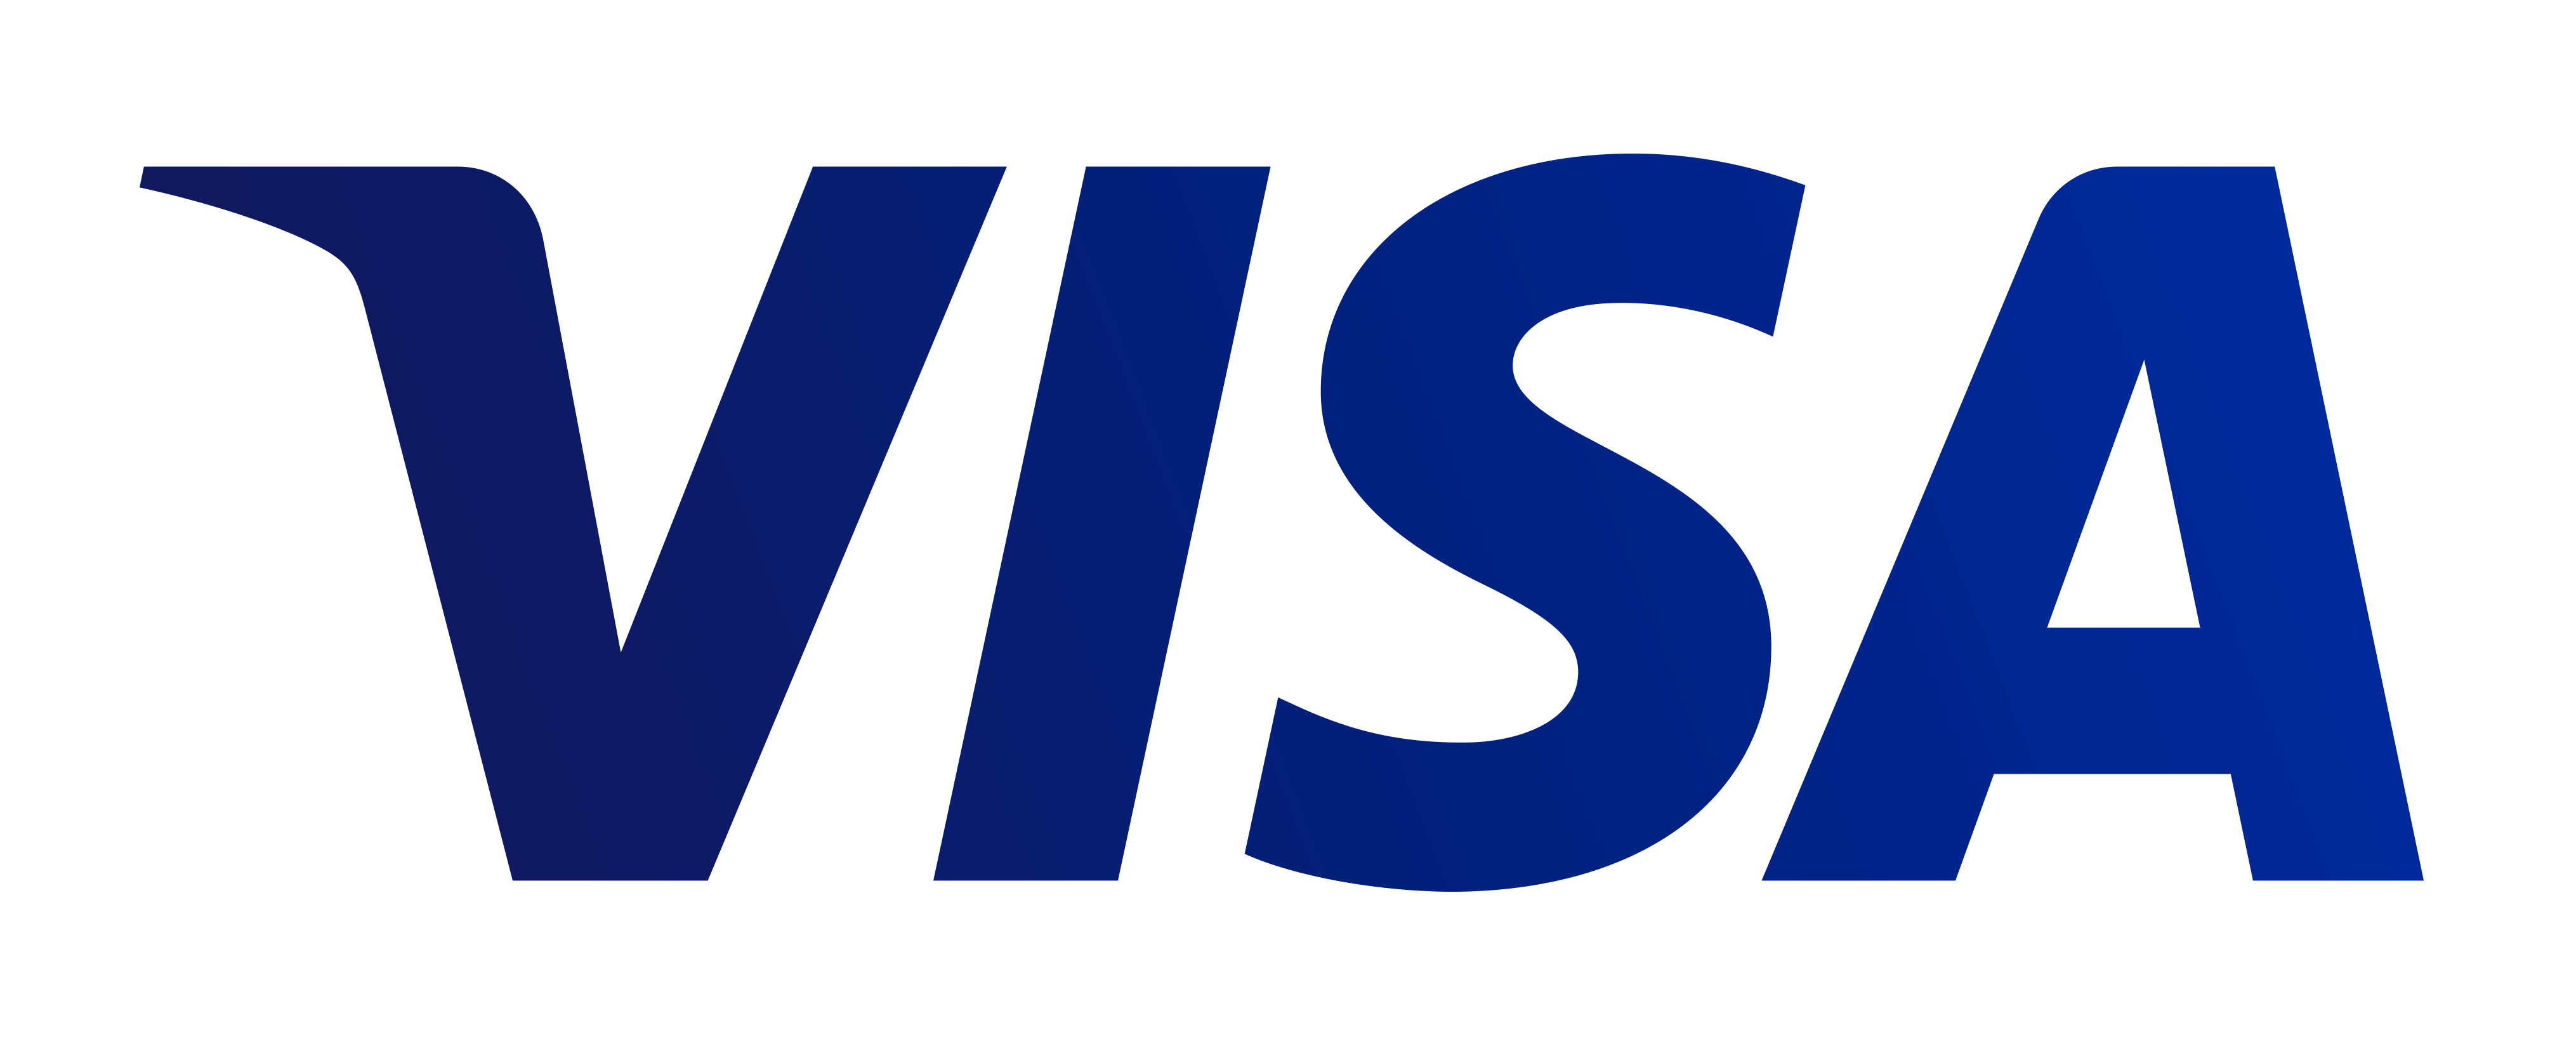 visa logo.png